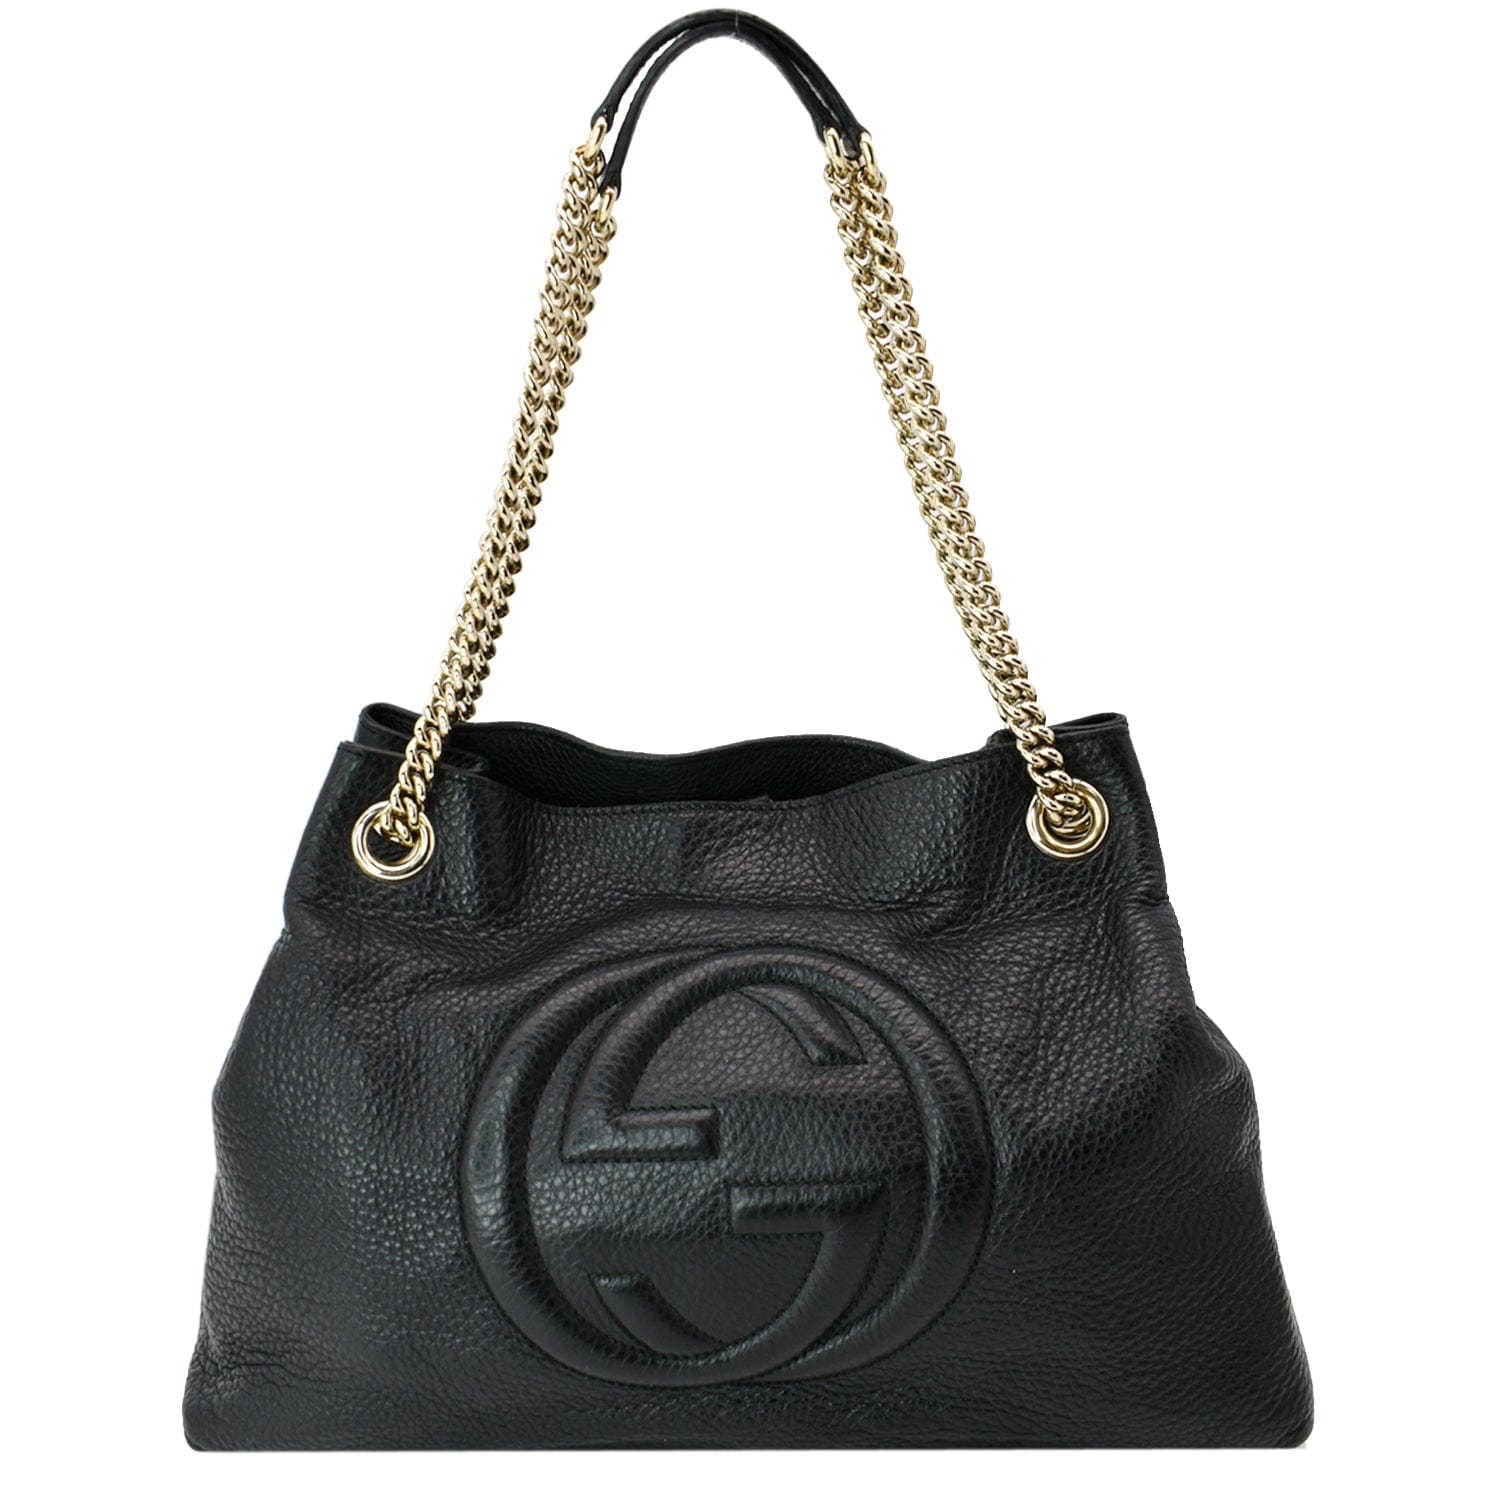 GUCCI Soho Pebbled Leather Chain Shoulder Bag Black 308982